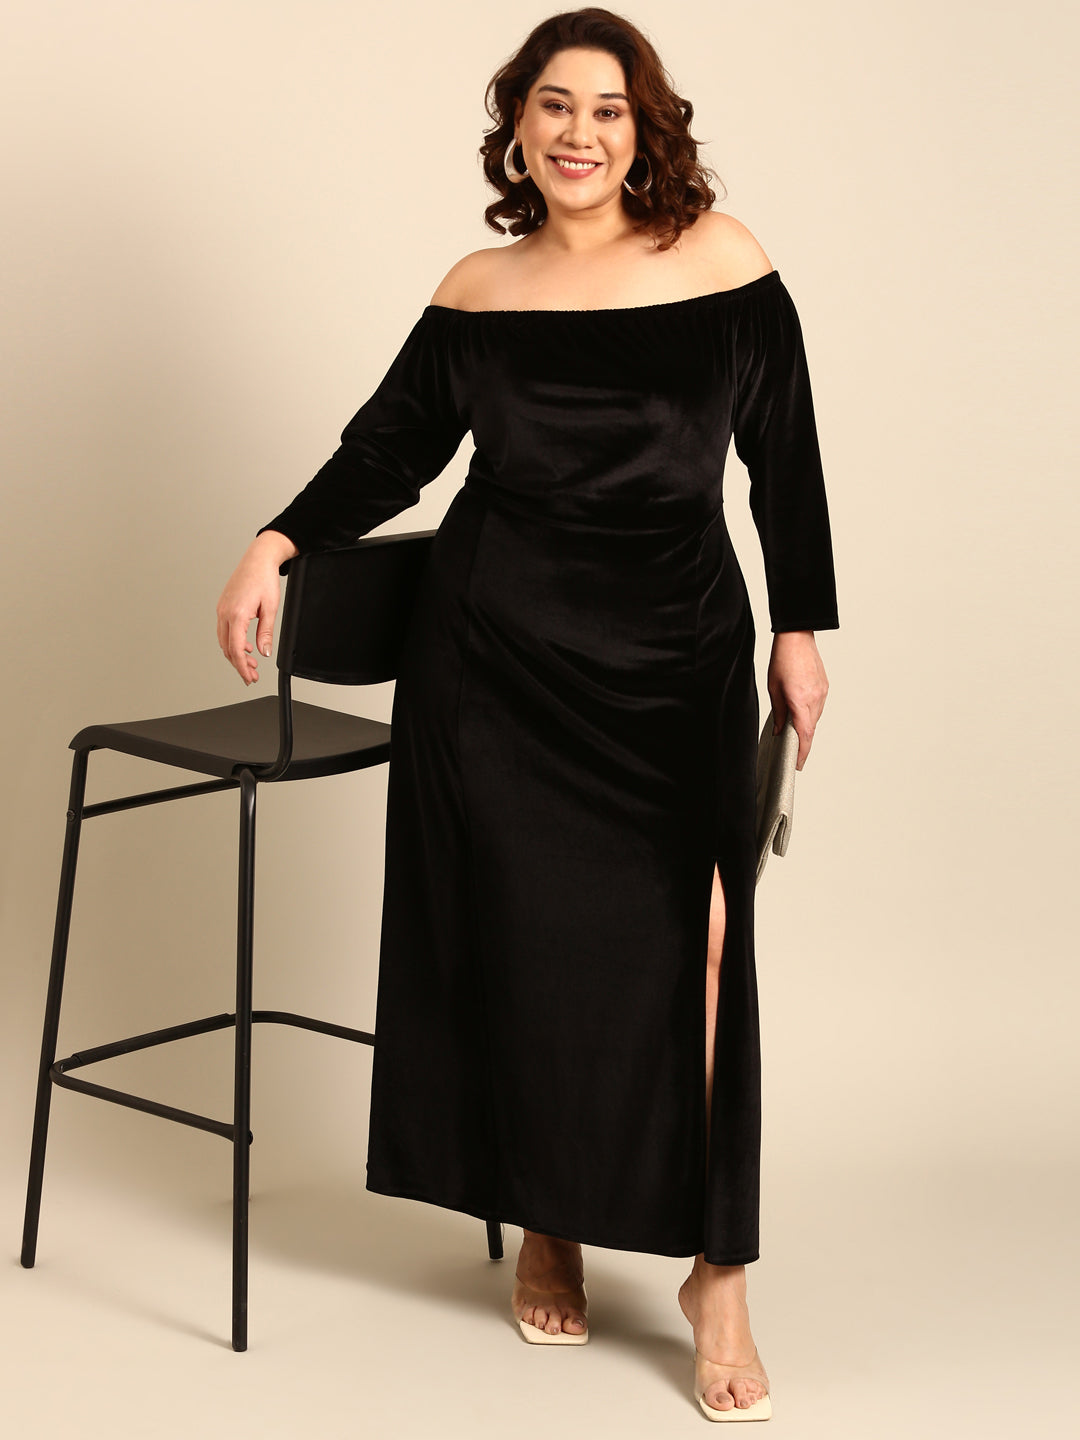 Buy AMYDUS Plus Size Black Sequin Dress for Women - XXL at Amazon.in